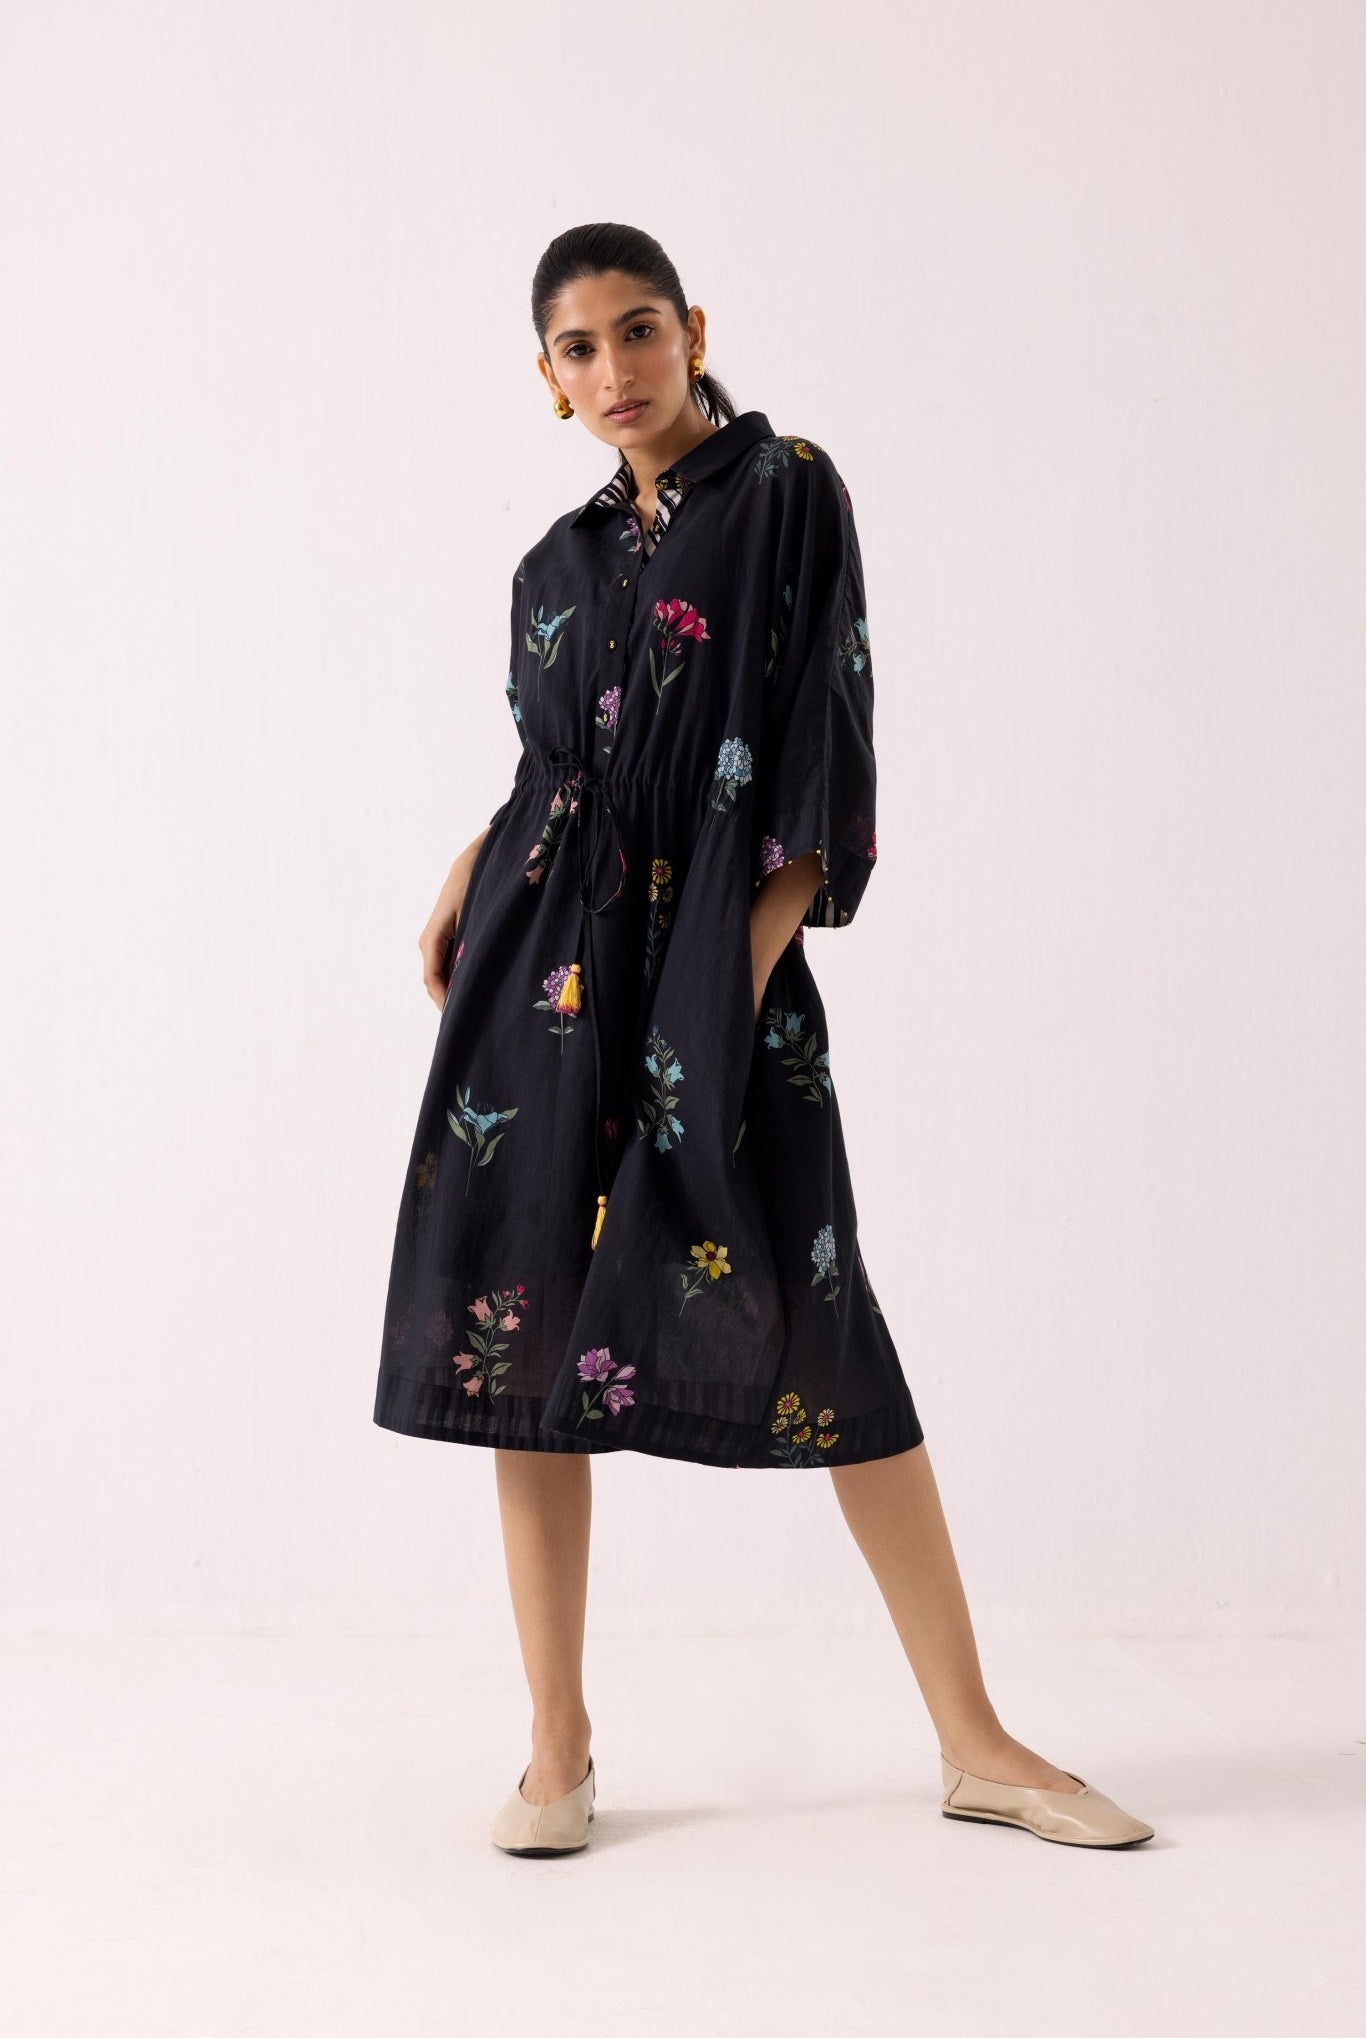 Zinnia Dress - CiceroniJacket, DressLabel Shreya Sharma